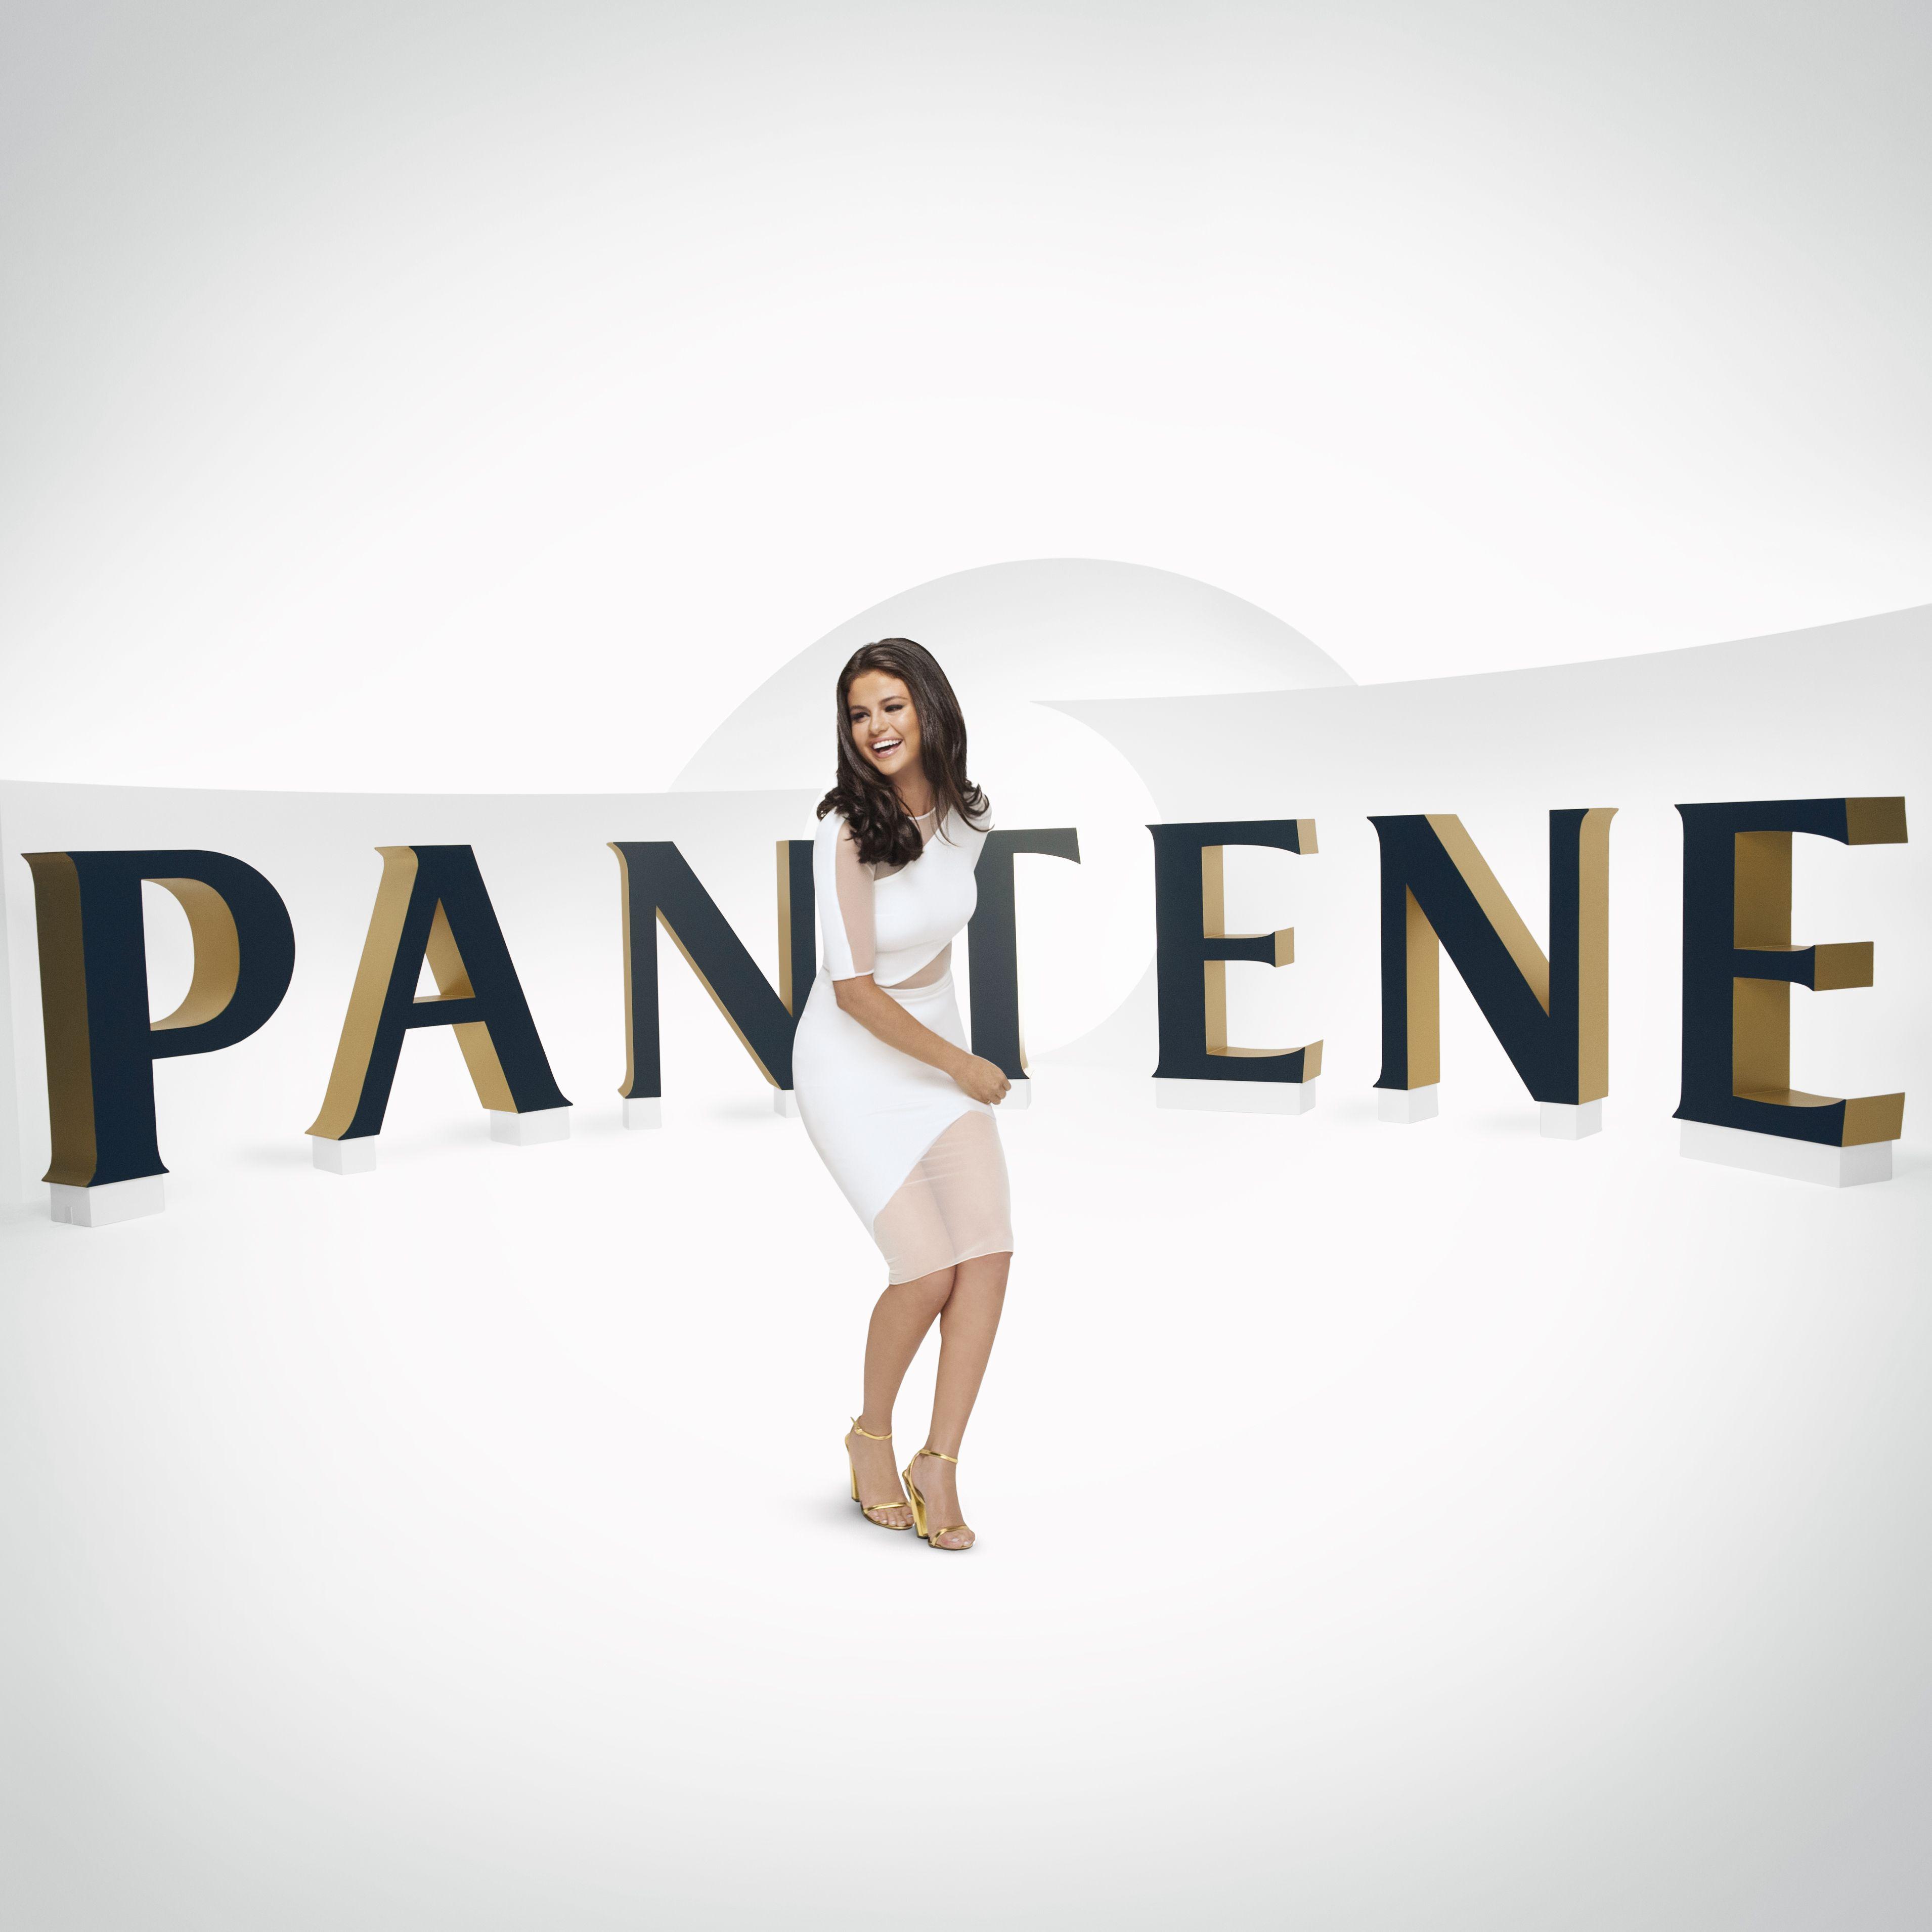 Selena Gomez Logo - Selena Gomez Shines as Pantene's Newest Ambassador. P&G News